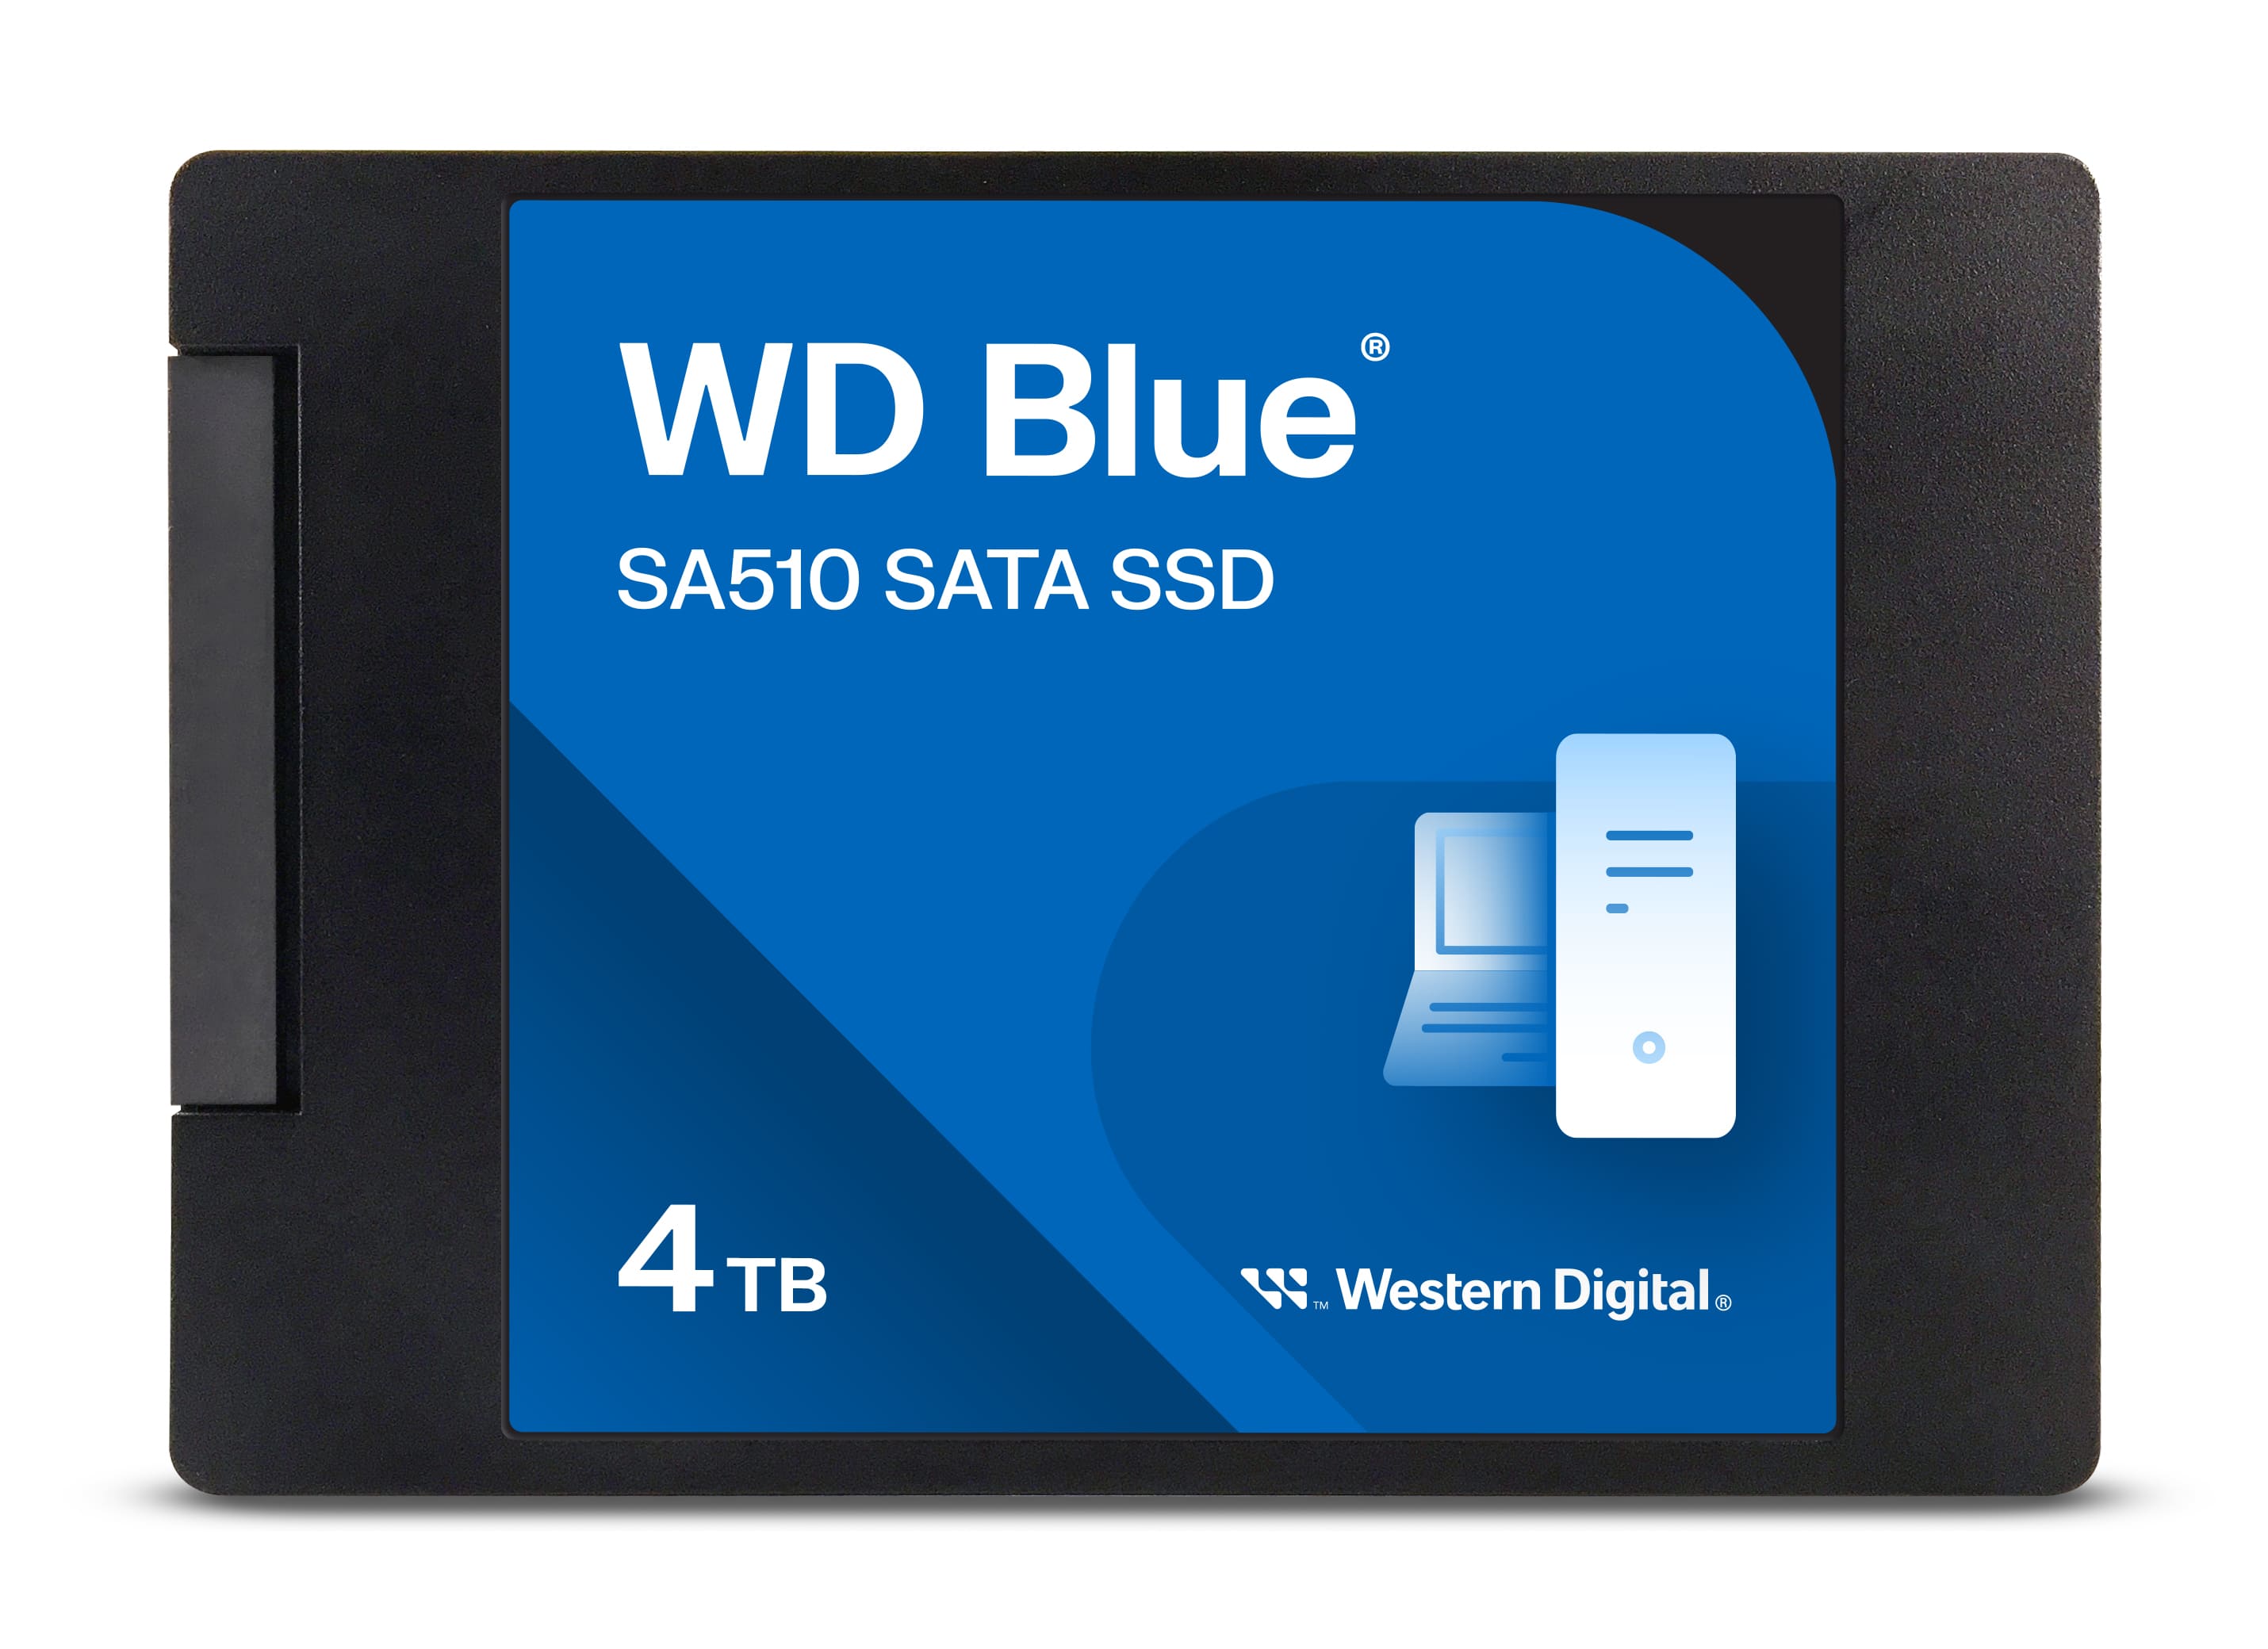 Western Digital ウエスタンデジタル WDS400T3B0A [ WD Blue SATA SSD 内蔵 4TB 2.5インチ  (読取り最大 560MB/s 書込み最大 520MB/s) PC メーカー保証5年 ] SA510｜パソコン・スマートフォン・デジタル機器販売のPC  ...